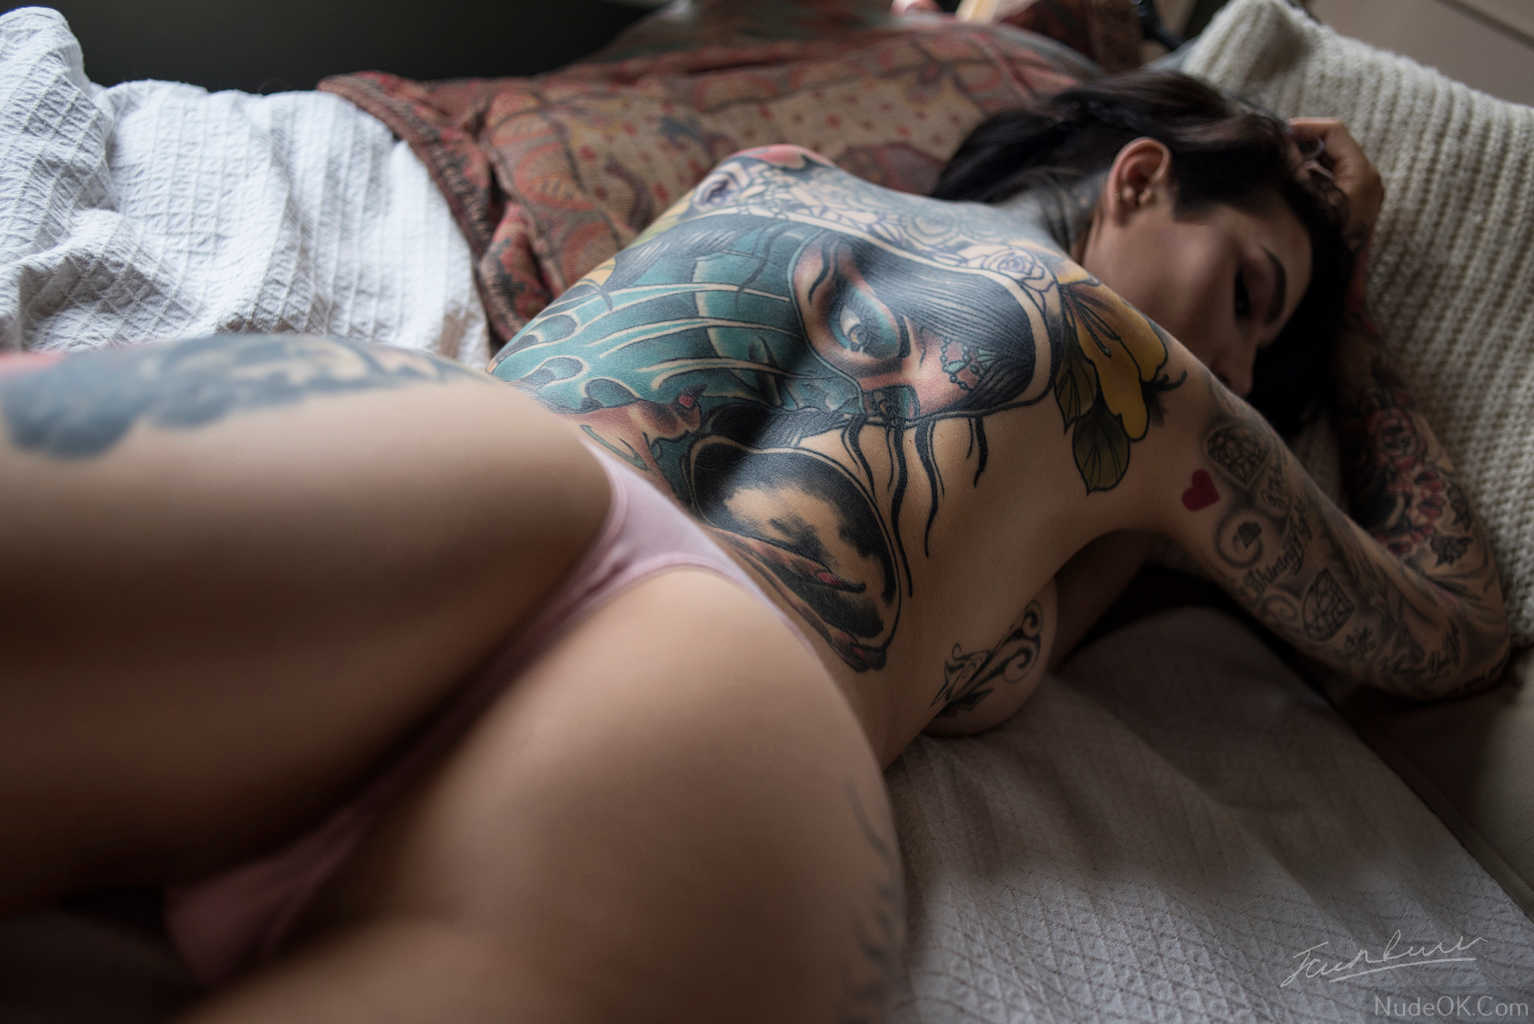 Pose Lying Bed Room Nude US-UK Girl White Skin